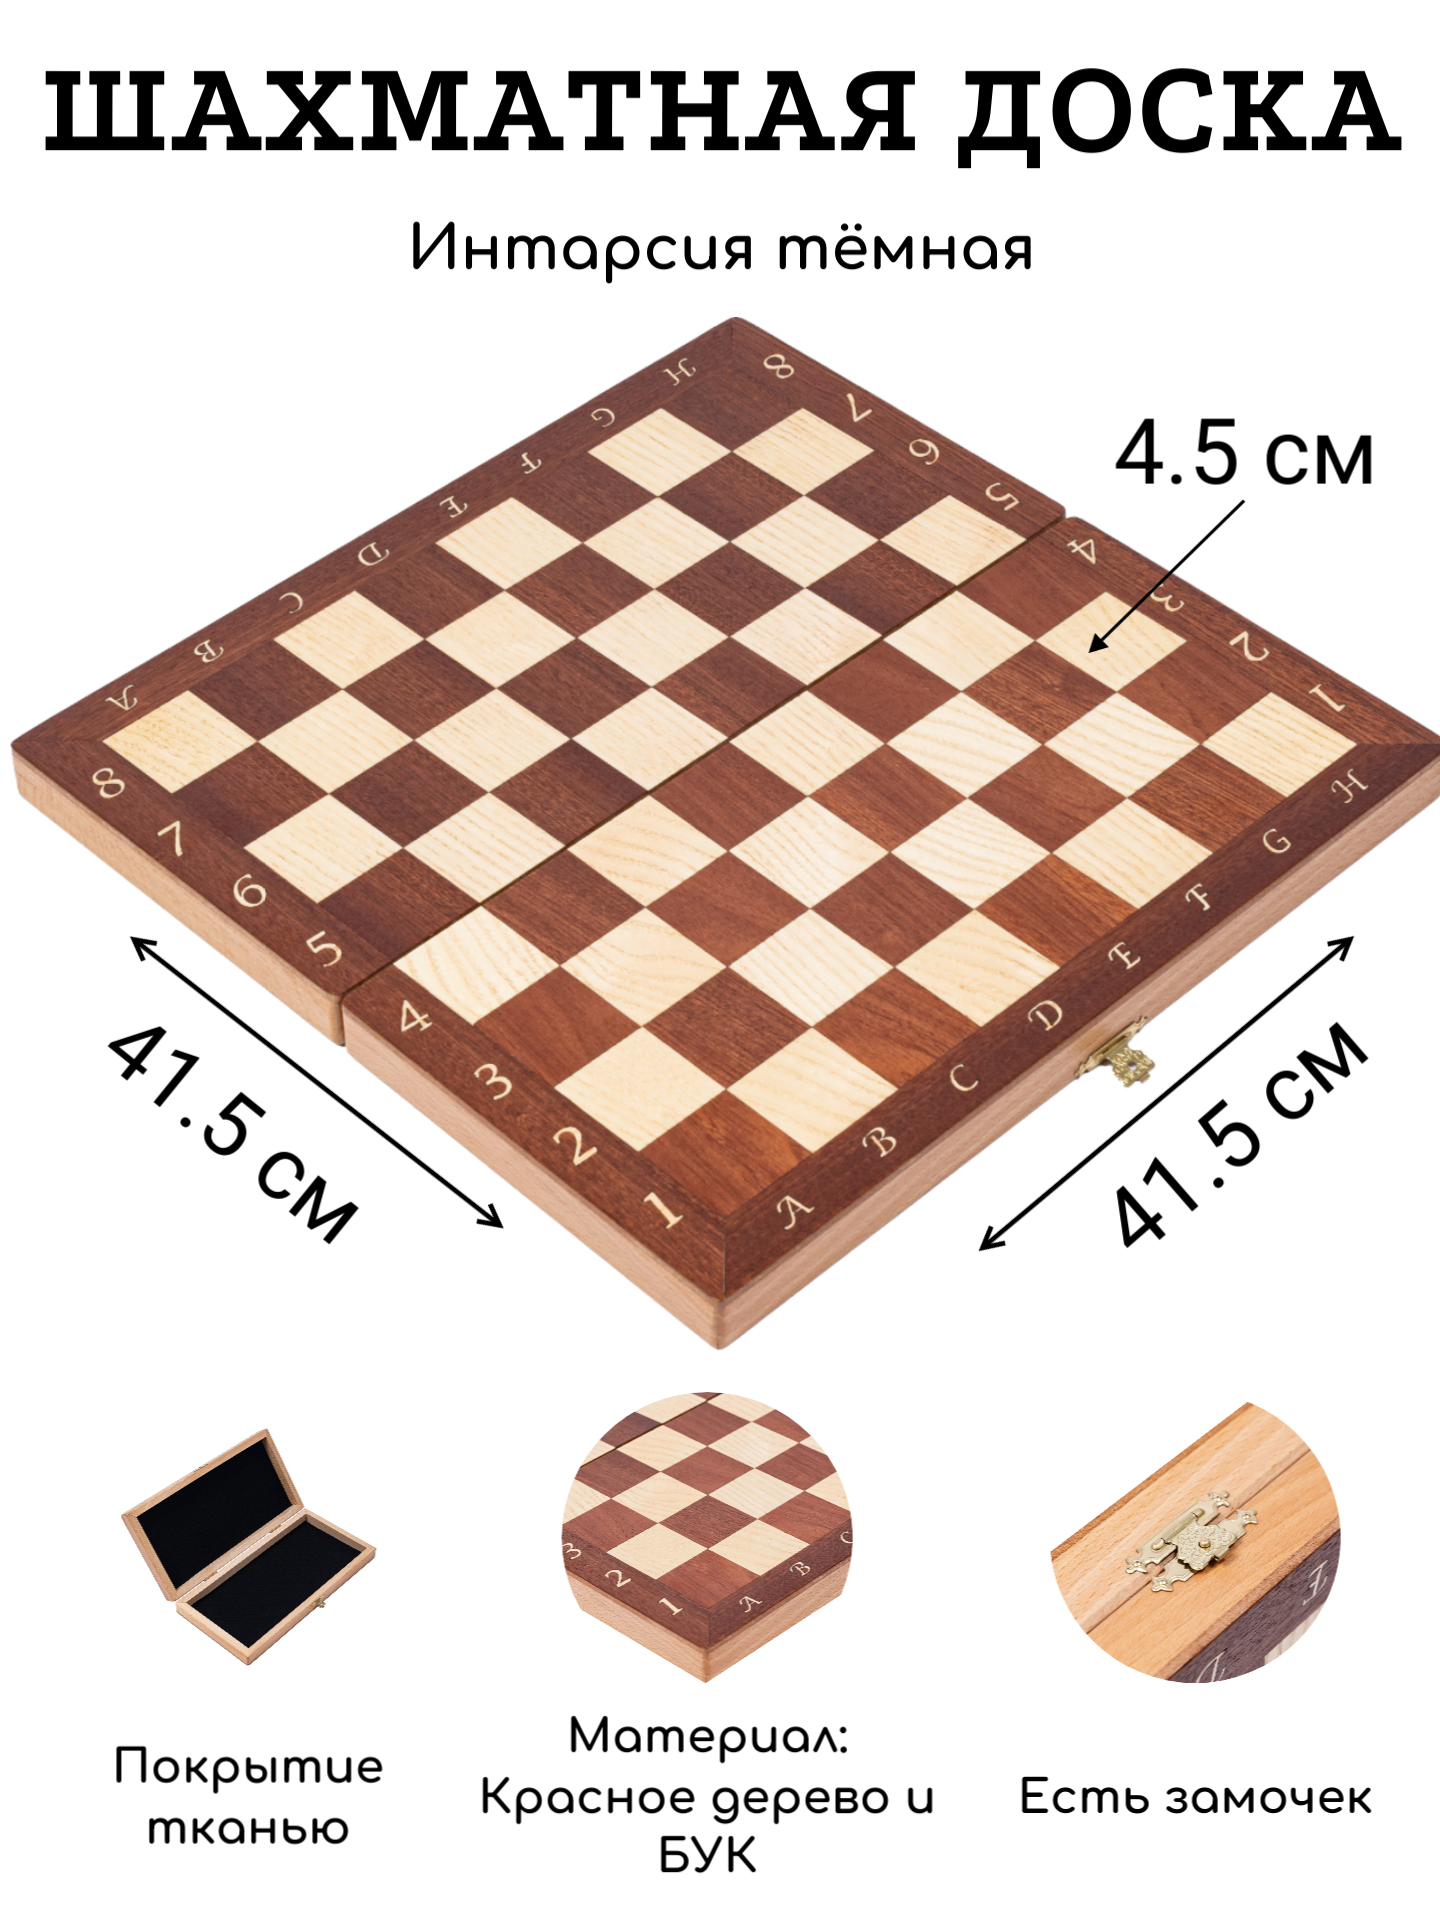 Шахматная доска без фигур Lavochkashop Турнирная 41 5 см интарсия stav041 чудо чемодан доска знаний магн гриф доска фигур магн 123шт